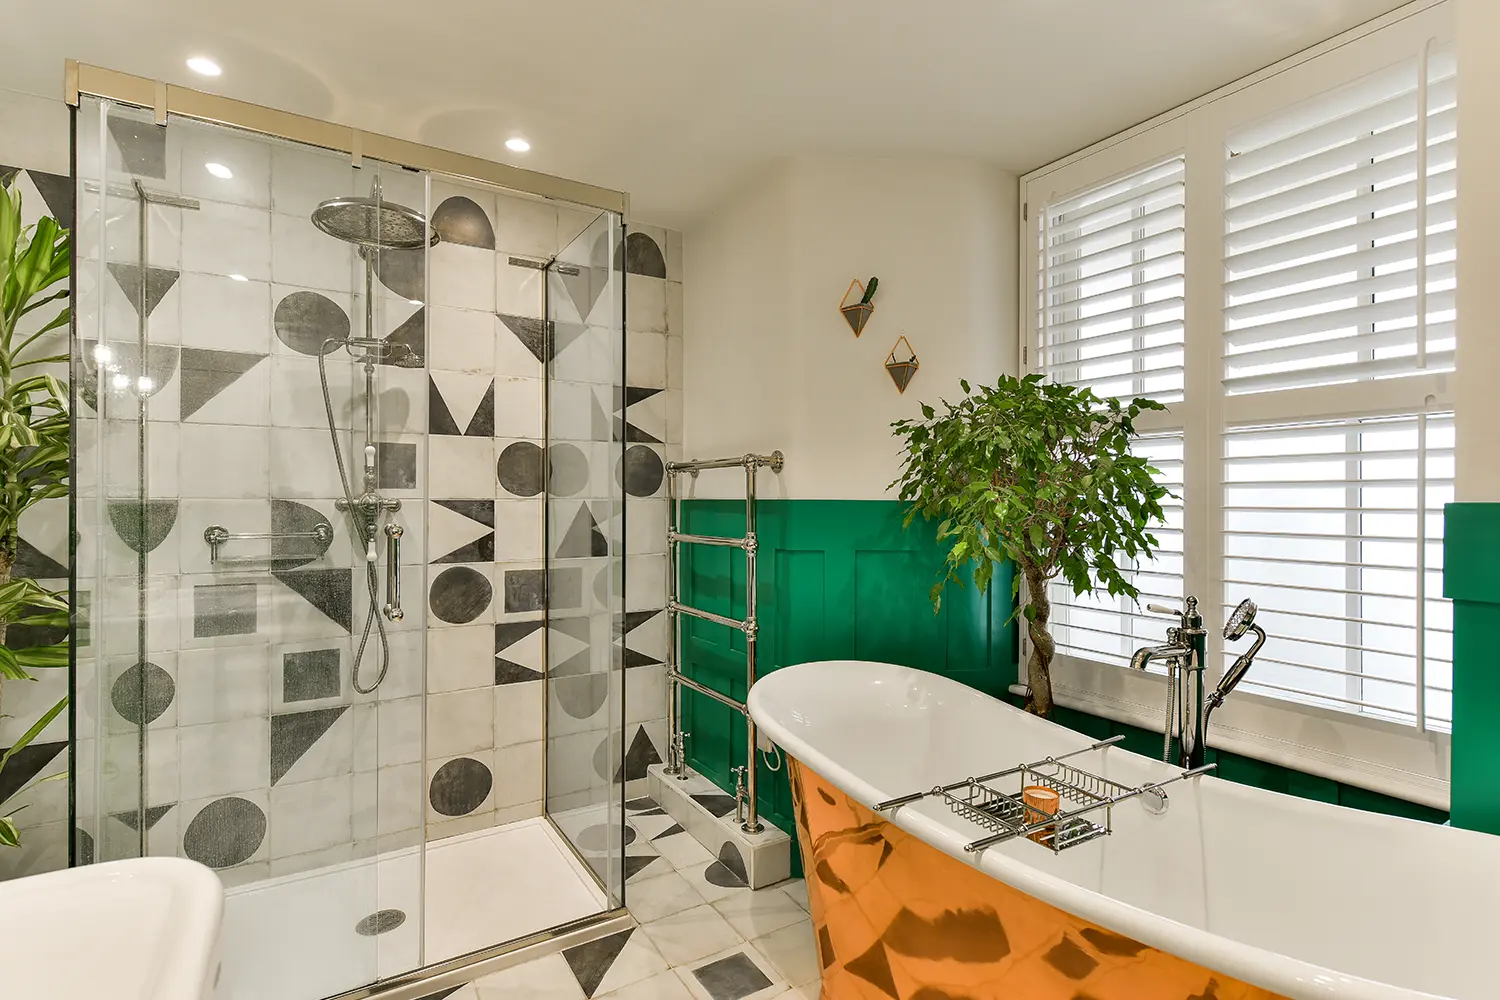 Heathfield Historic Apartment bathroom interior design